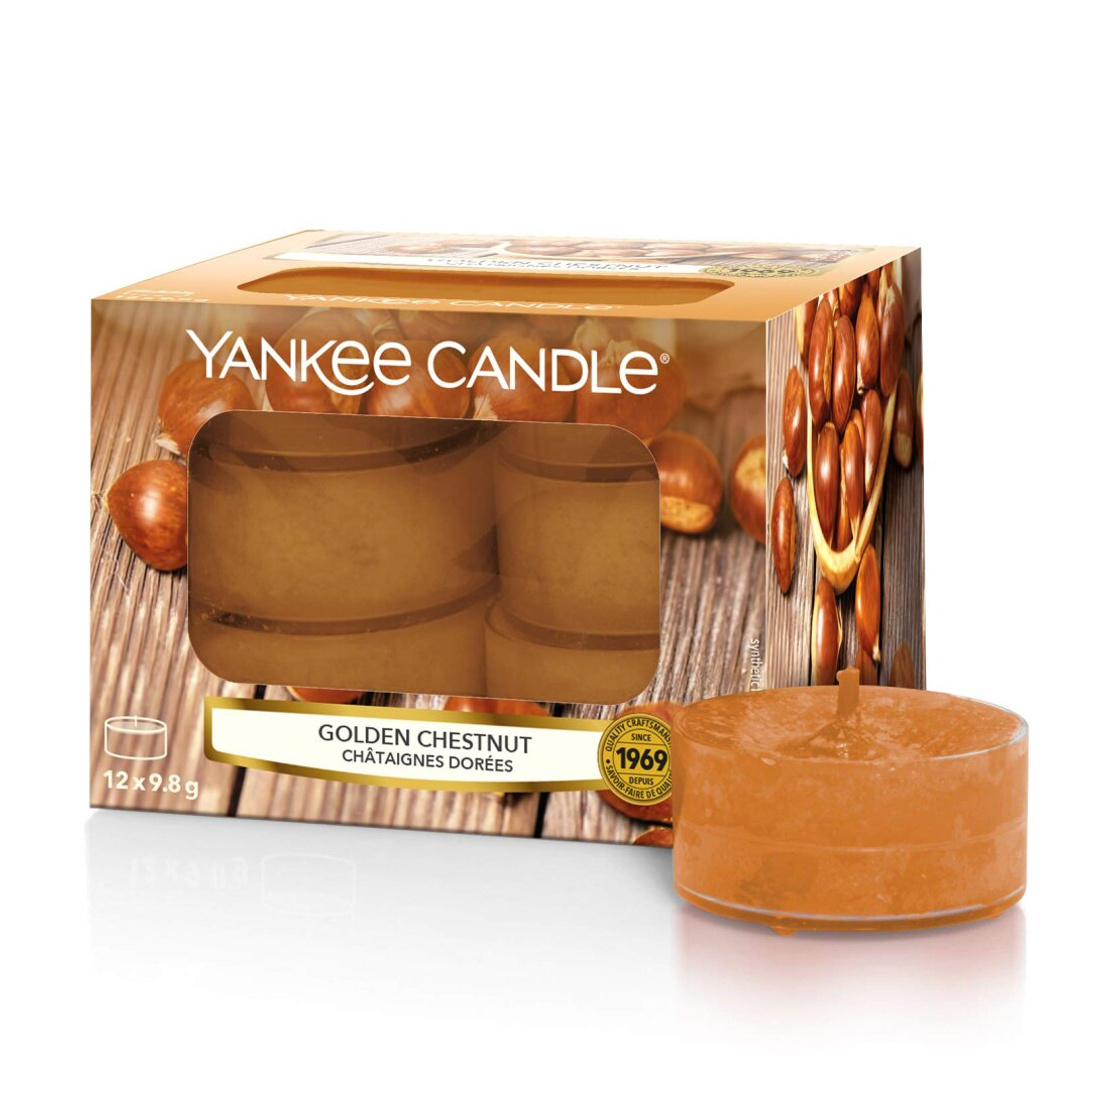 Yankee Candle Golden Chestnut Tea Lights